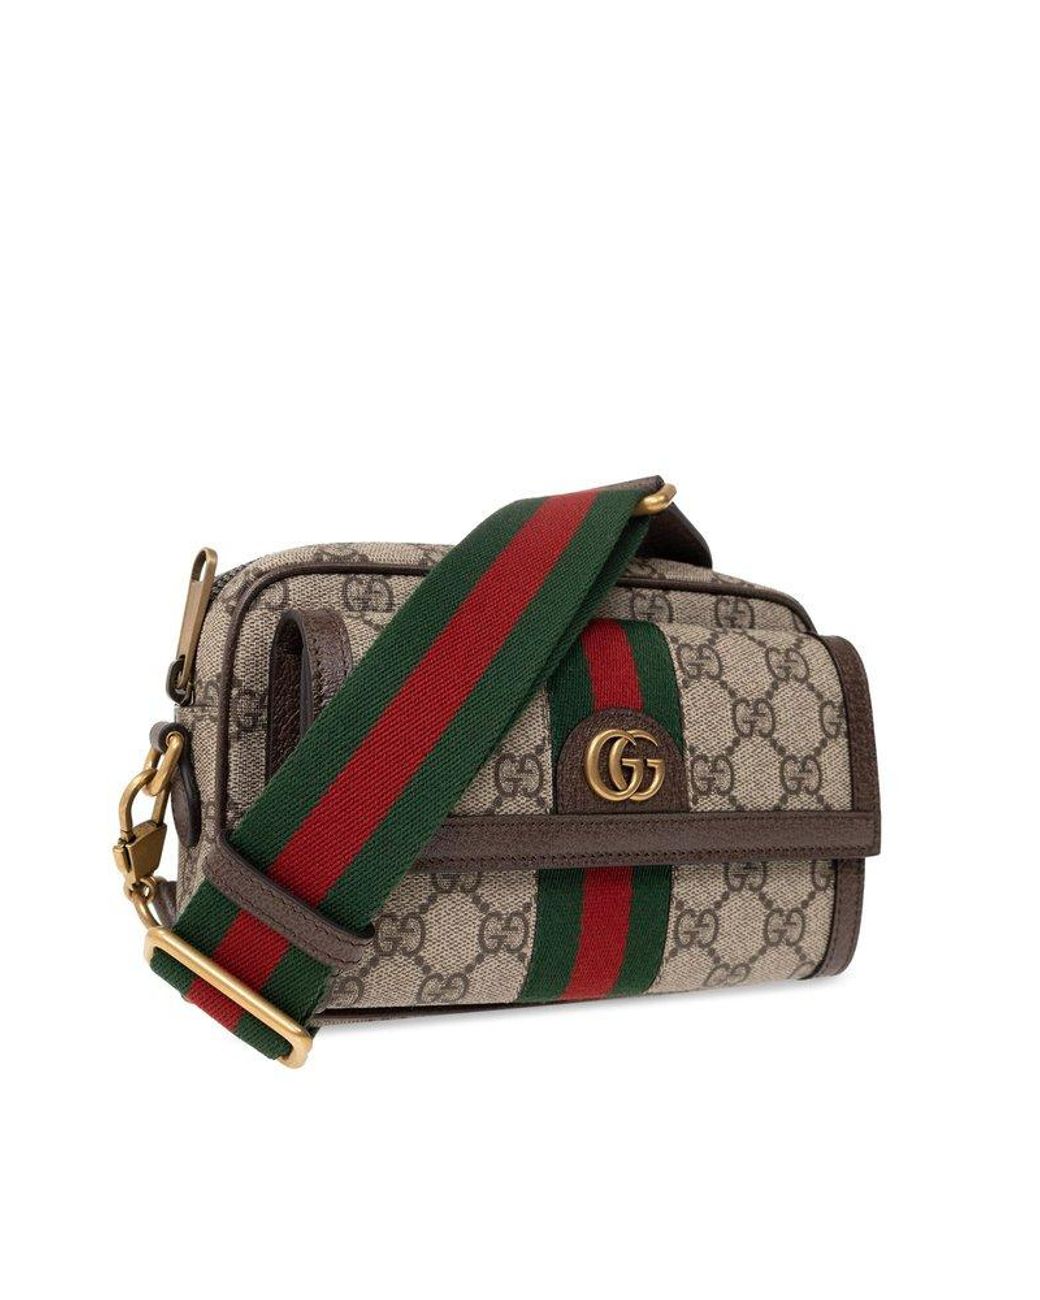 Gucci Ophidia Gg Supreme Small Canvas Belt Bag, $750